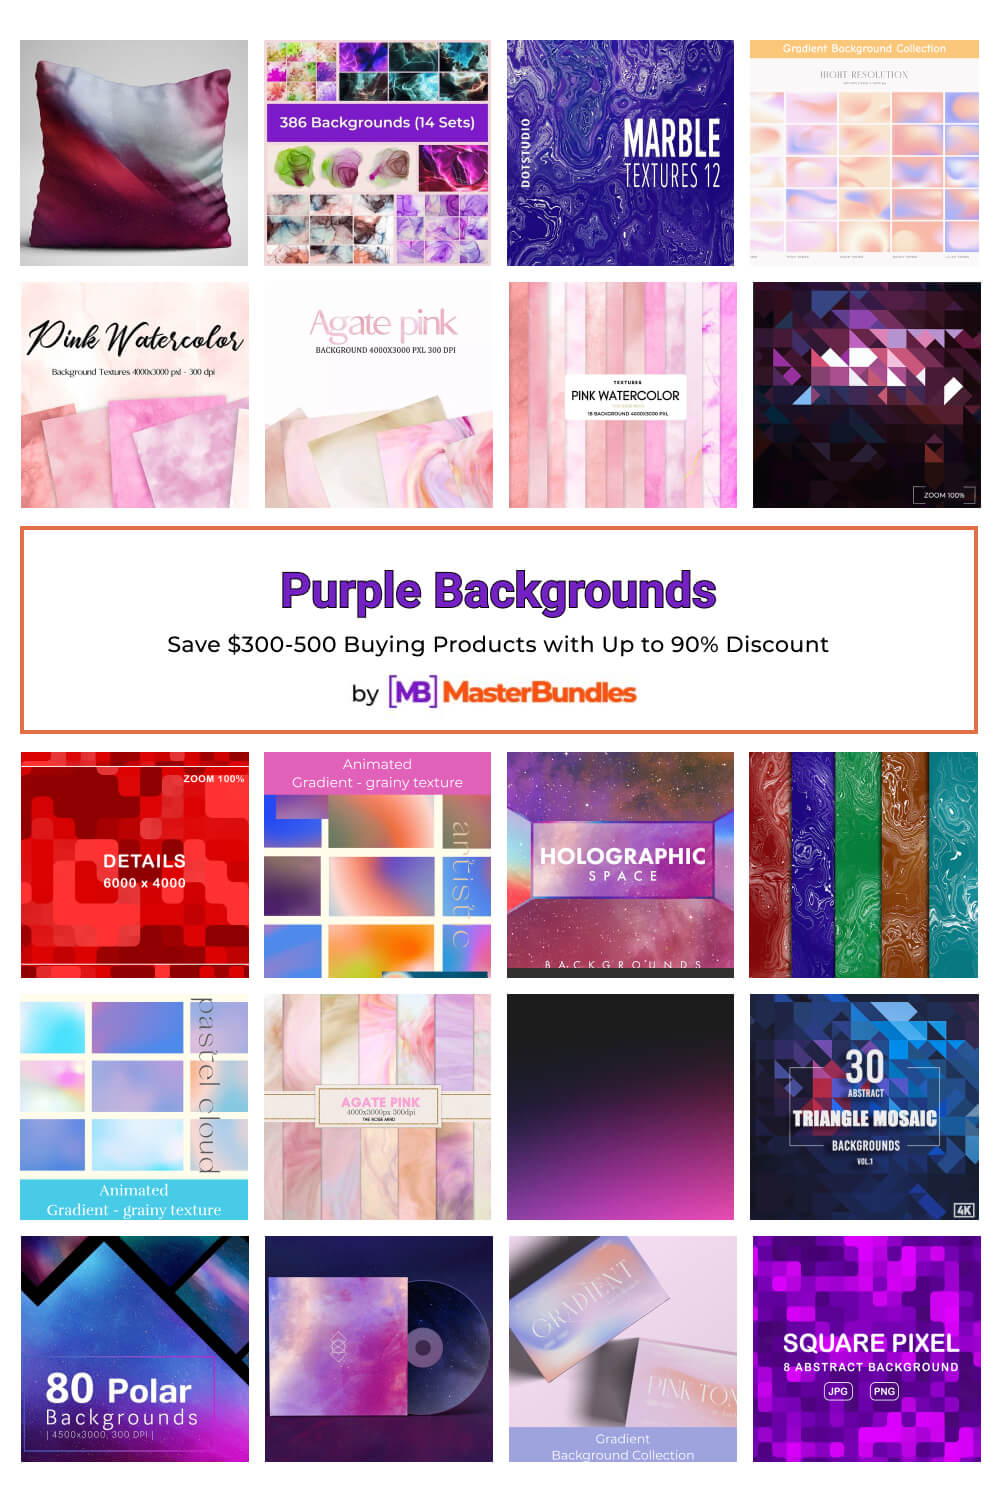 purple backgrounds pinterest image.